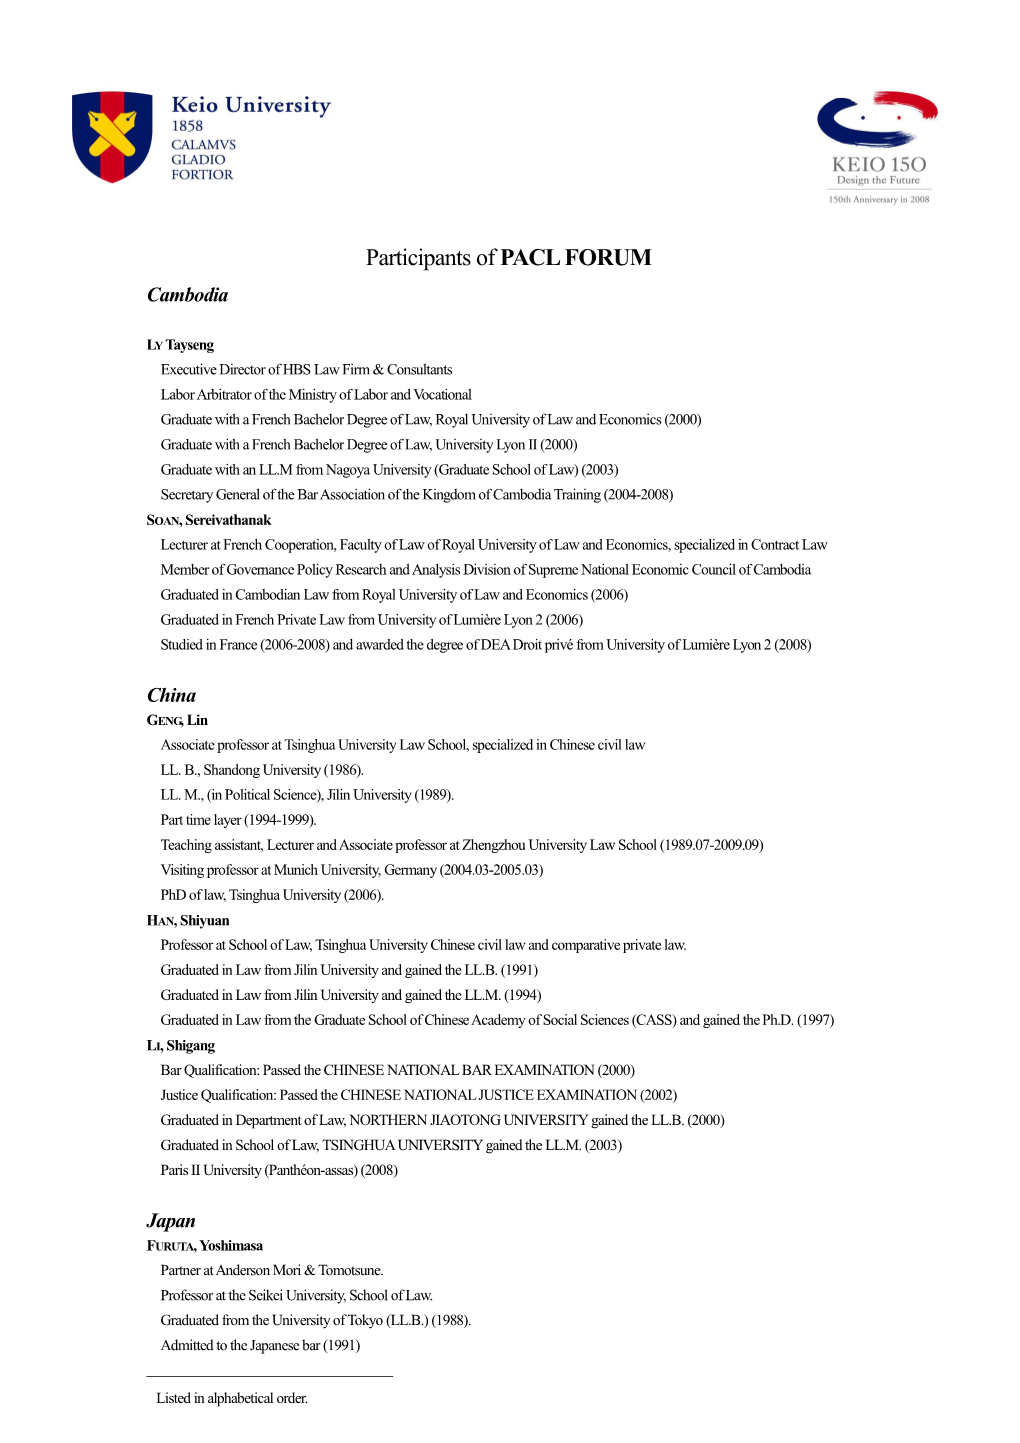 Liste of PACL Members